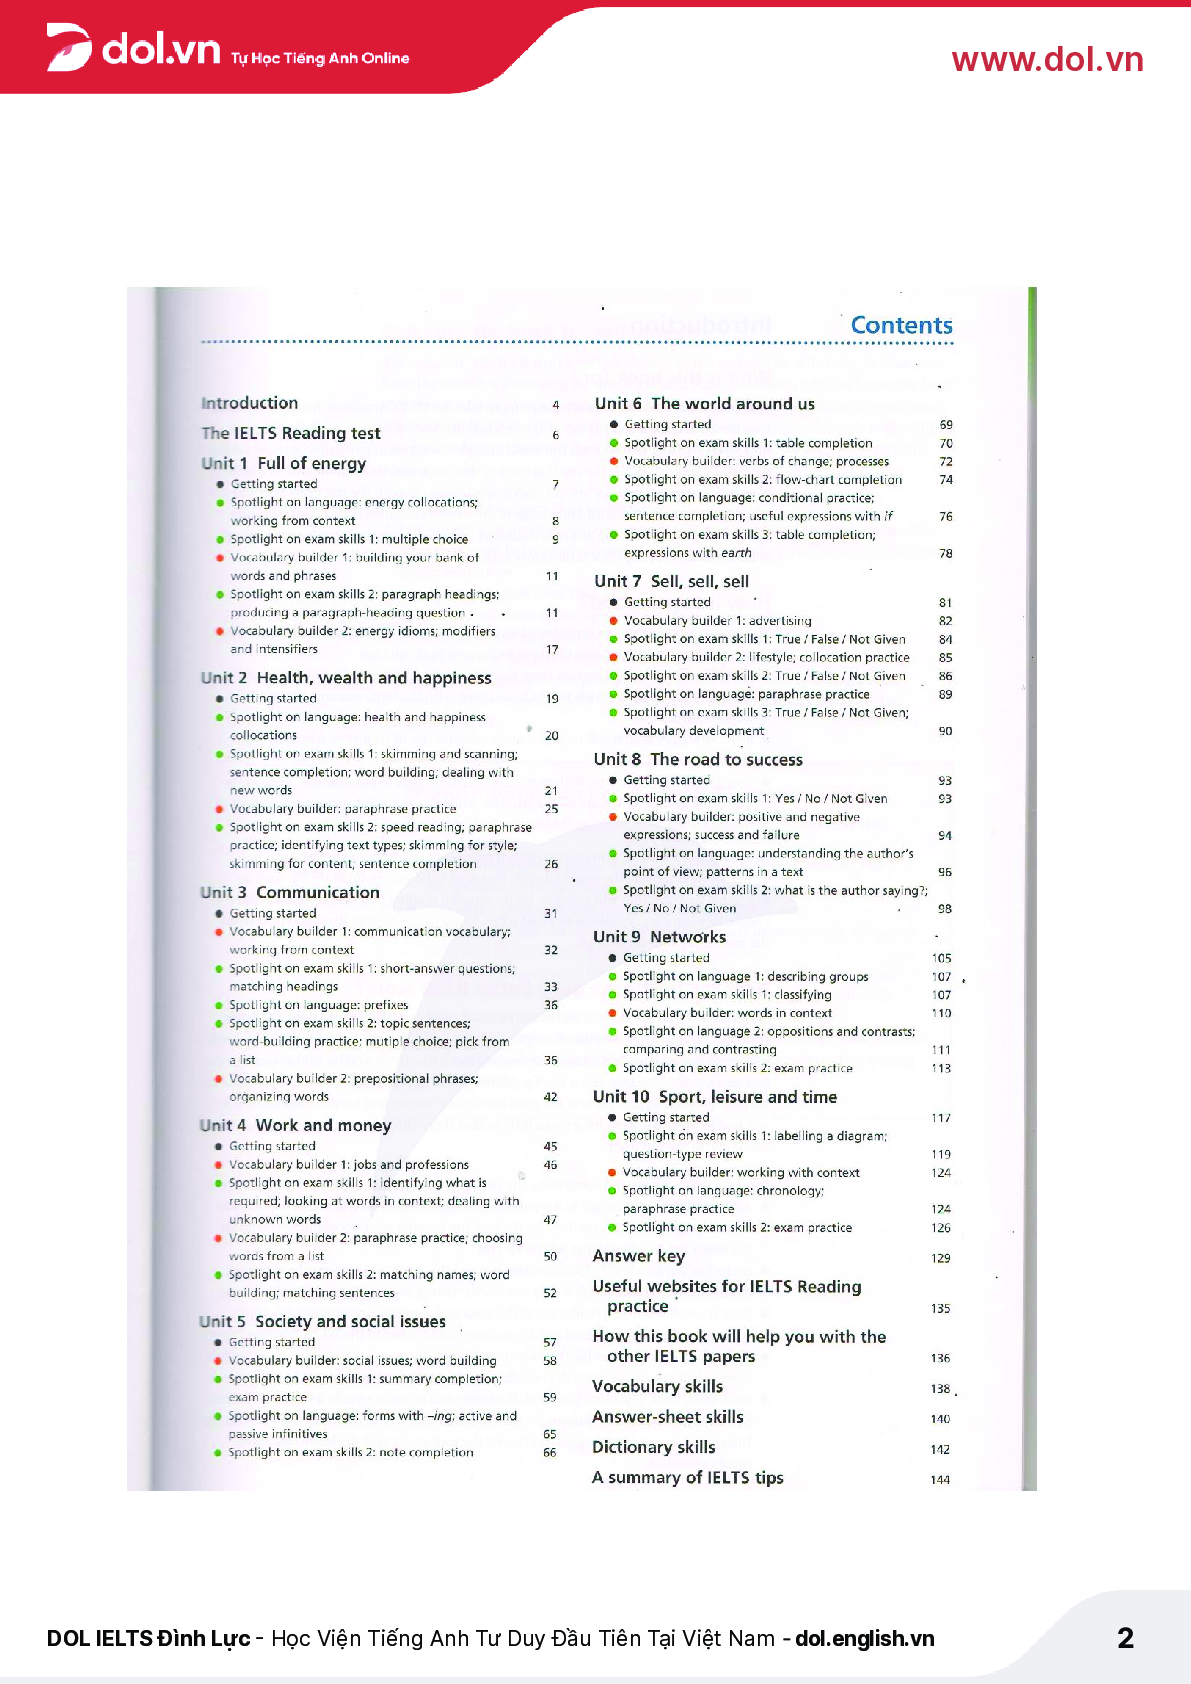 Sách IELTS Advantage Reading Skills pdf | Xem online, tải PDF miễn phí (trang 2)